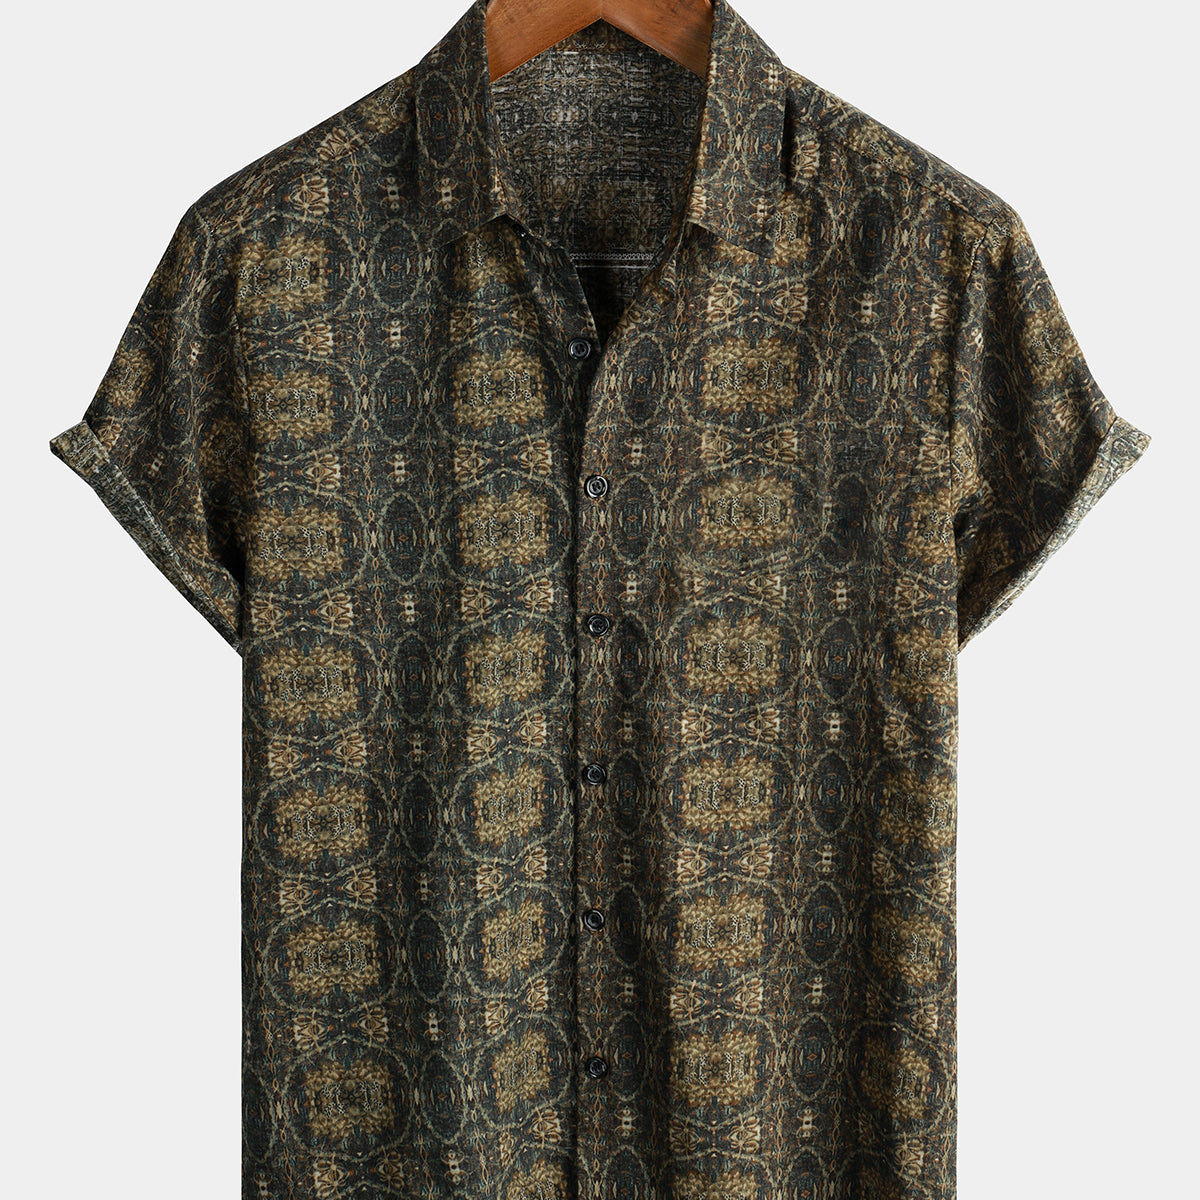 Men's Cotton Vintage Short Sleeve 70s Retro Summer Button Up Shirt